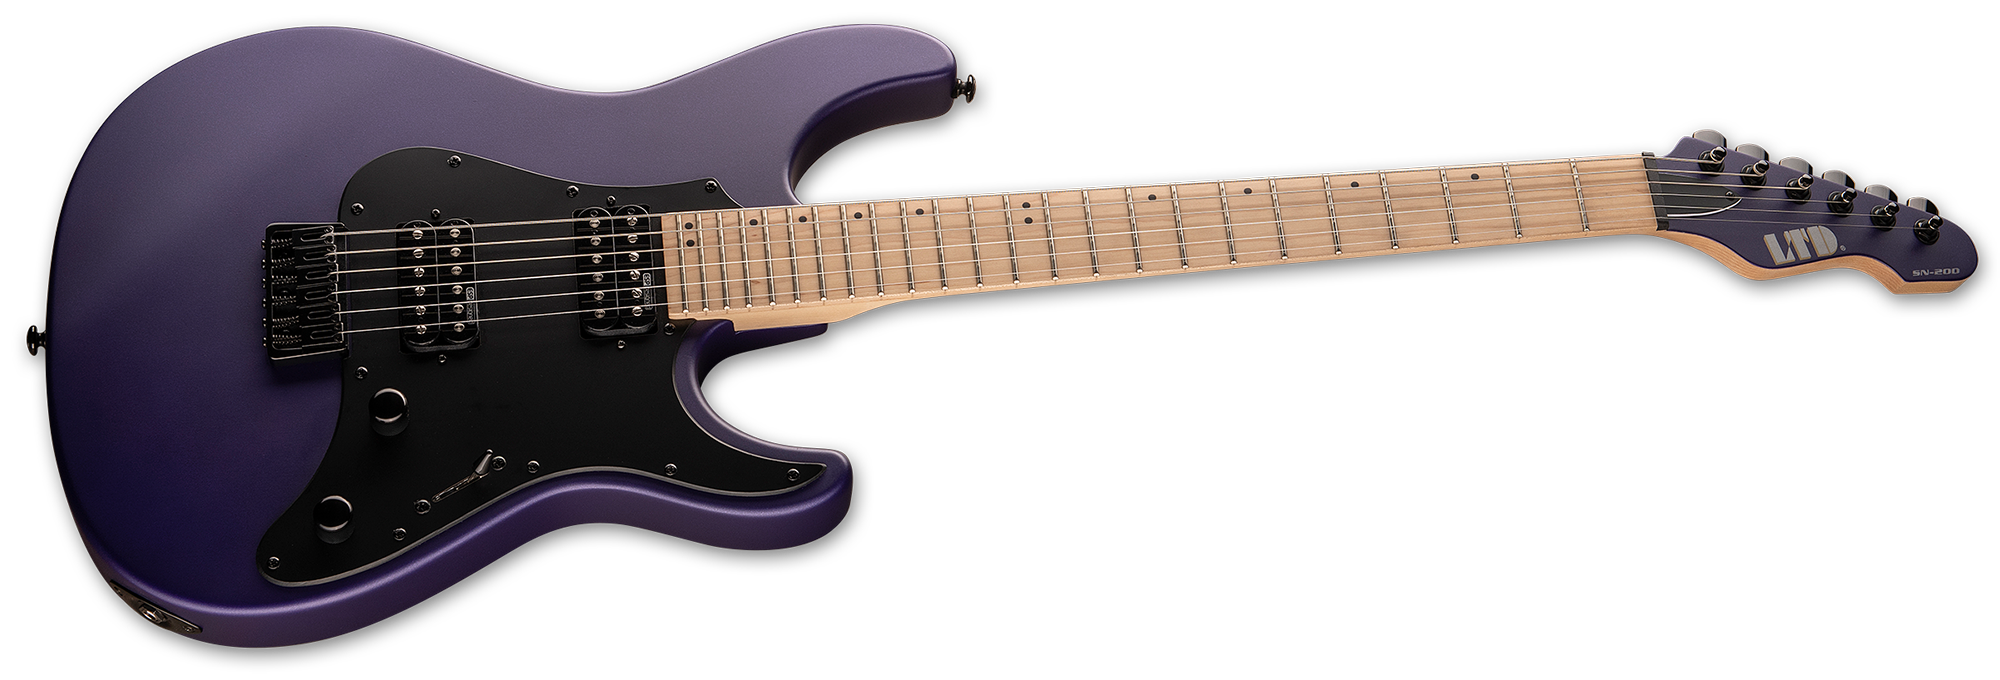 Ltd Sn-200ht Hh Ht Mn - Dark Metallic Purple Satin - Guitarra eléctrica con forma de str. - Variation 1